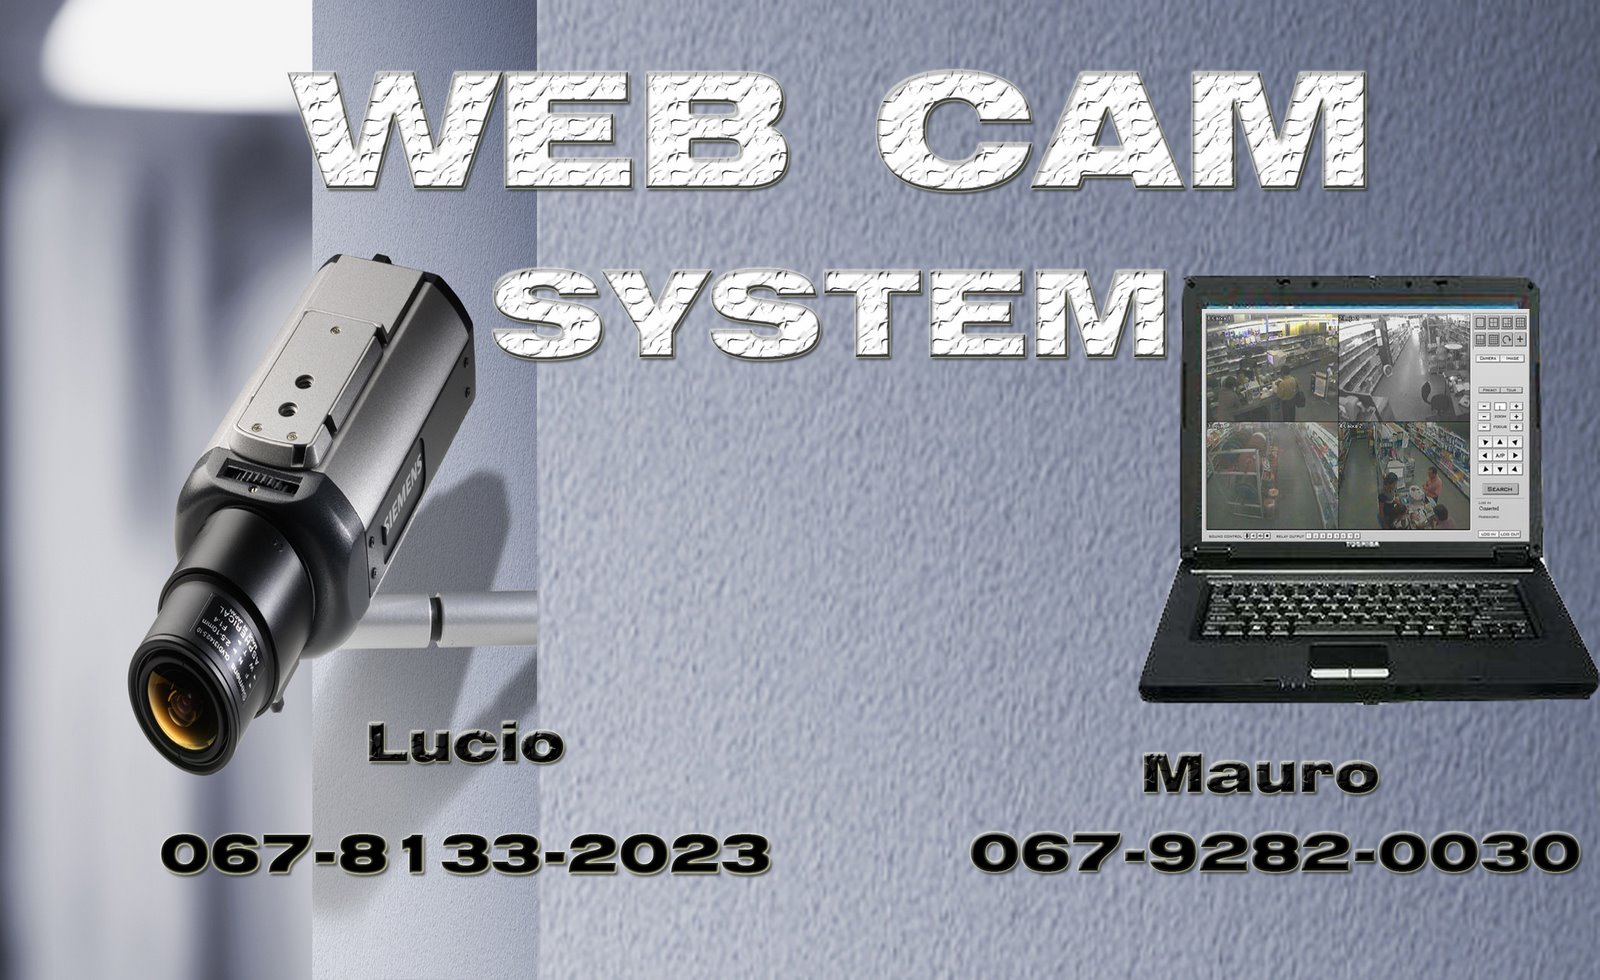 Web cam system